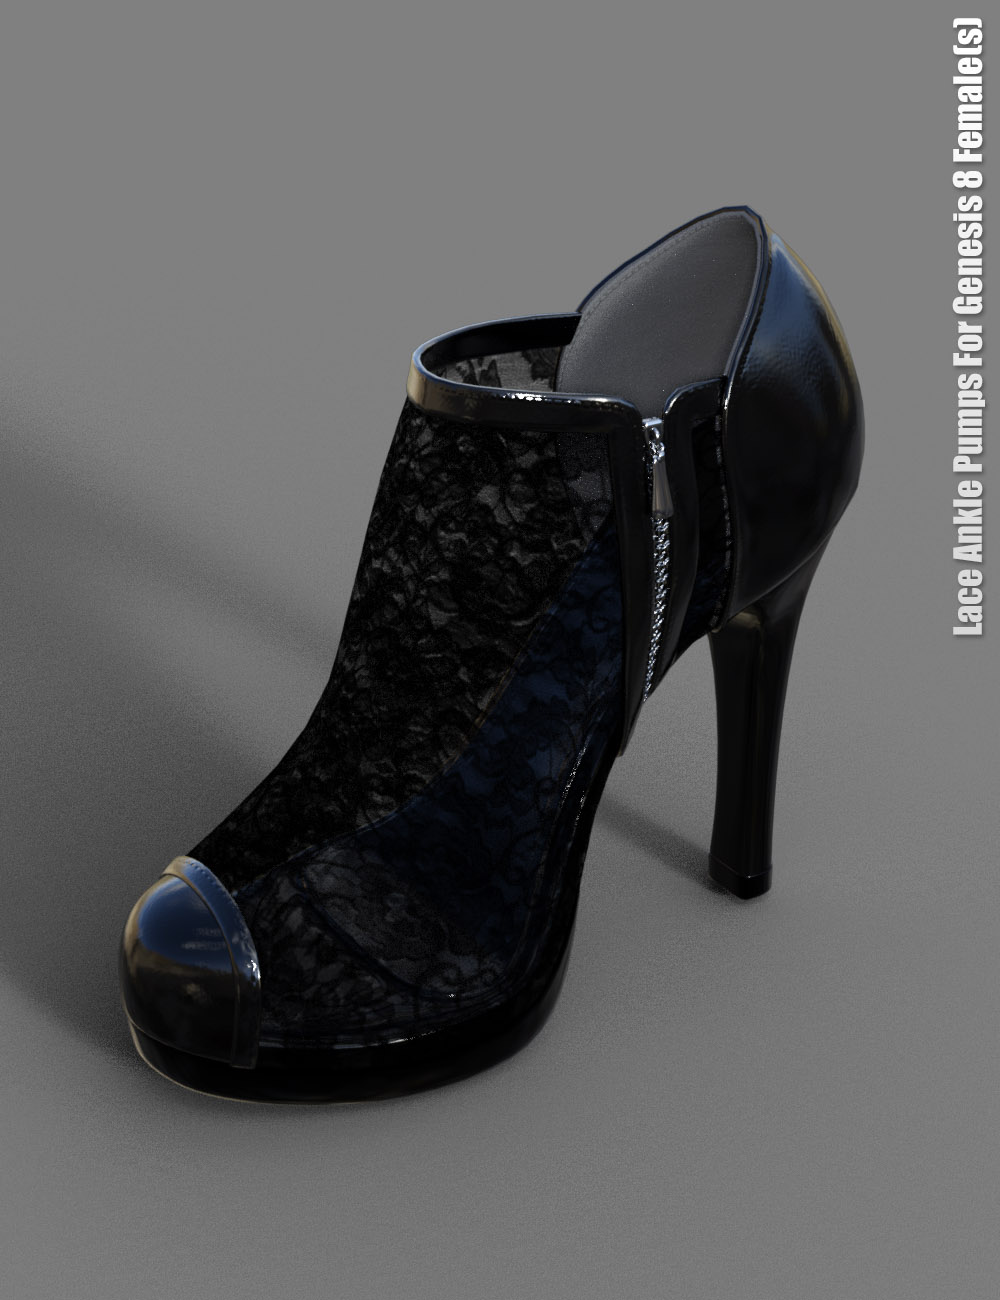 Lace Ankle Pumps for Genesis 8 Female(s) by: dx30, 3D Models by Daz 3D